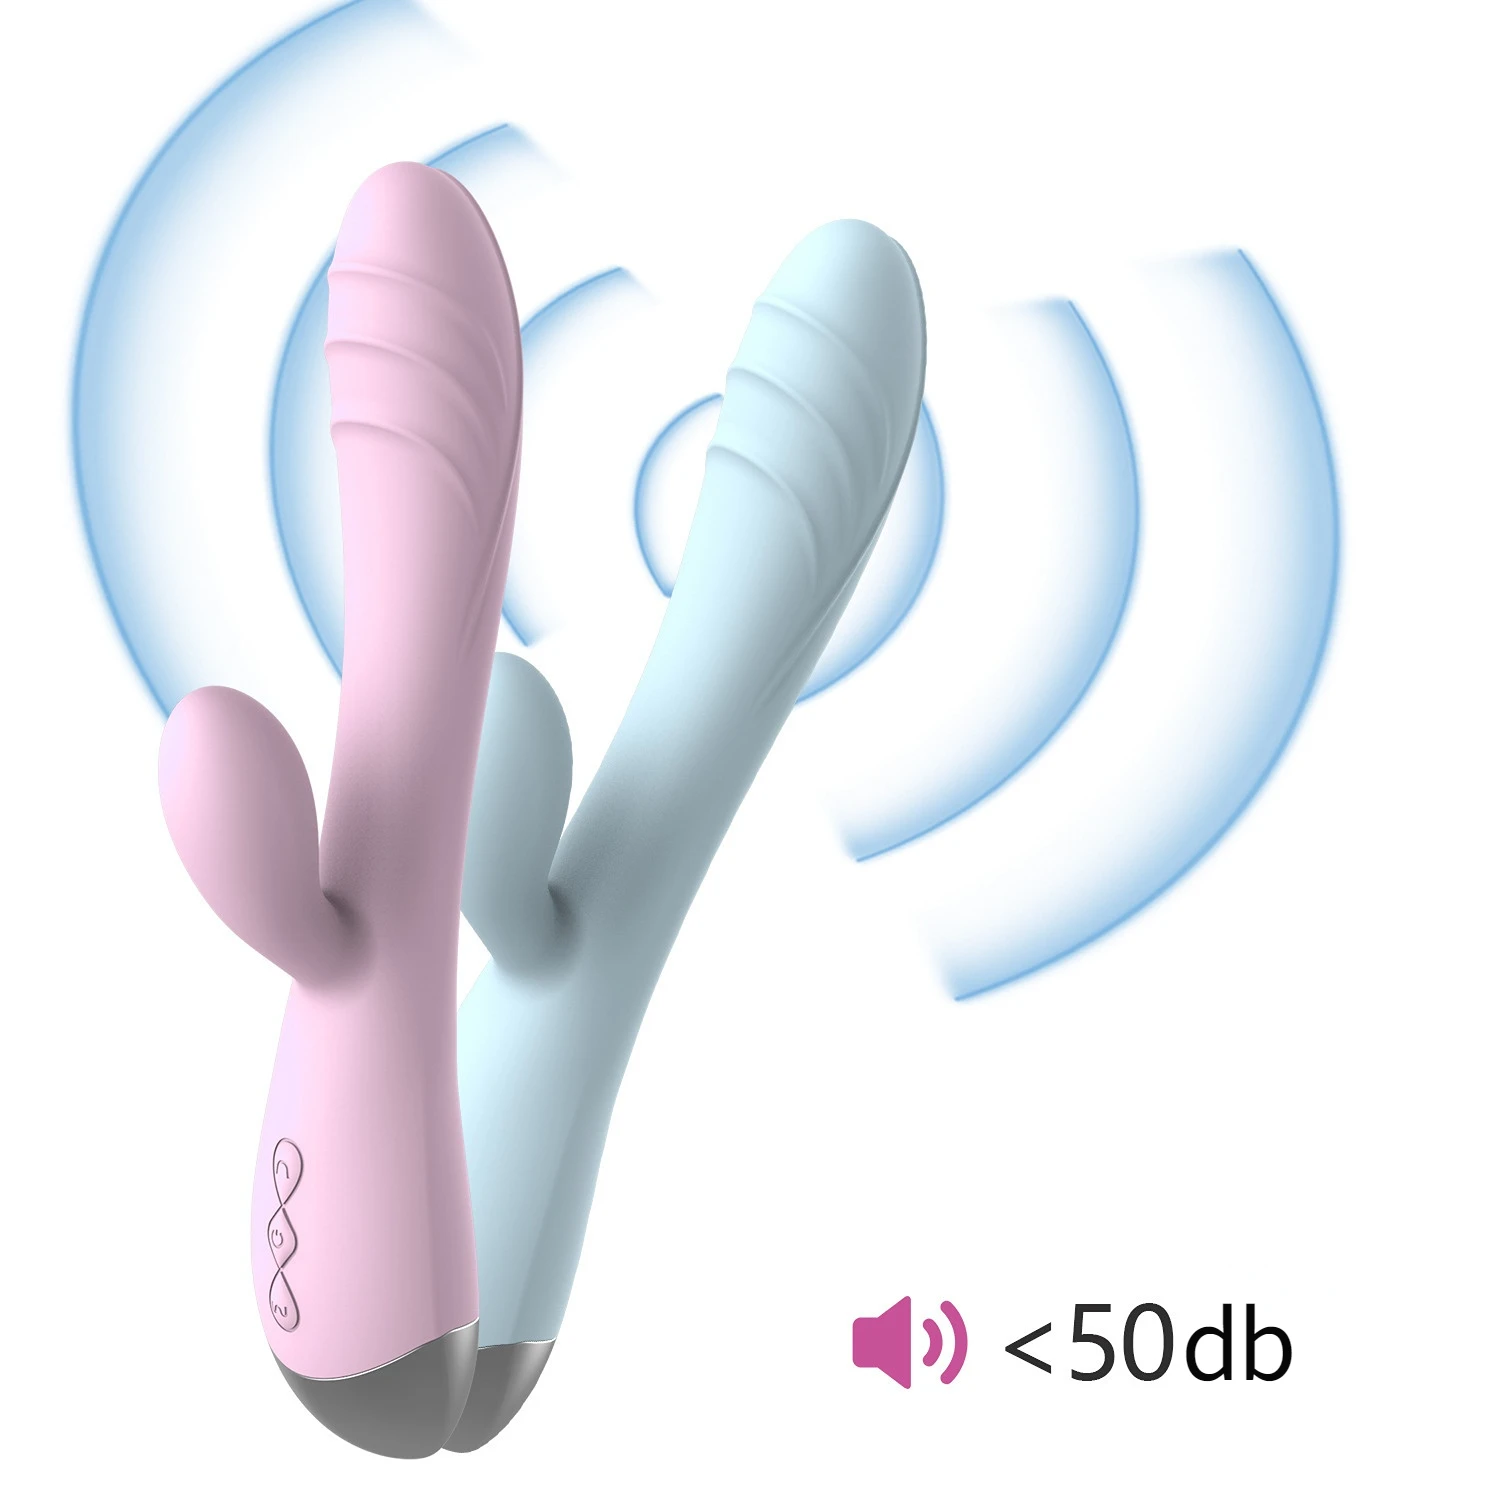 China Factory Wholesale 10 Frequency G-spot Dildo Vibrator for Women Clitoral Stimulator Wear Vibrating Egg Clit Female Panties Sex Toys for Adults 18 S6609fce5d1164b6c8c8cf5e96db73cbfR